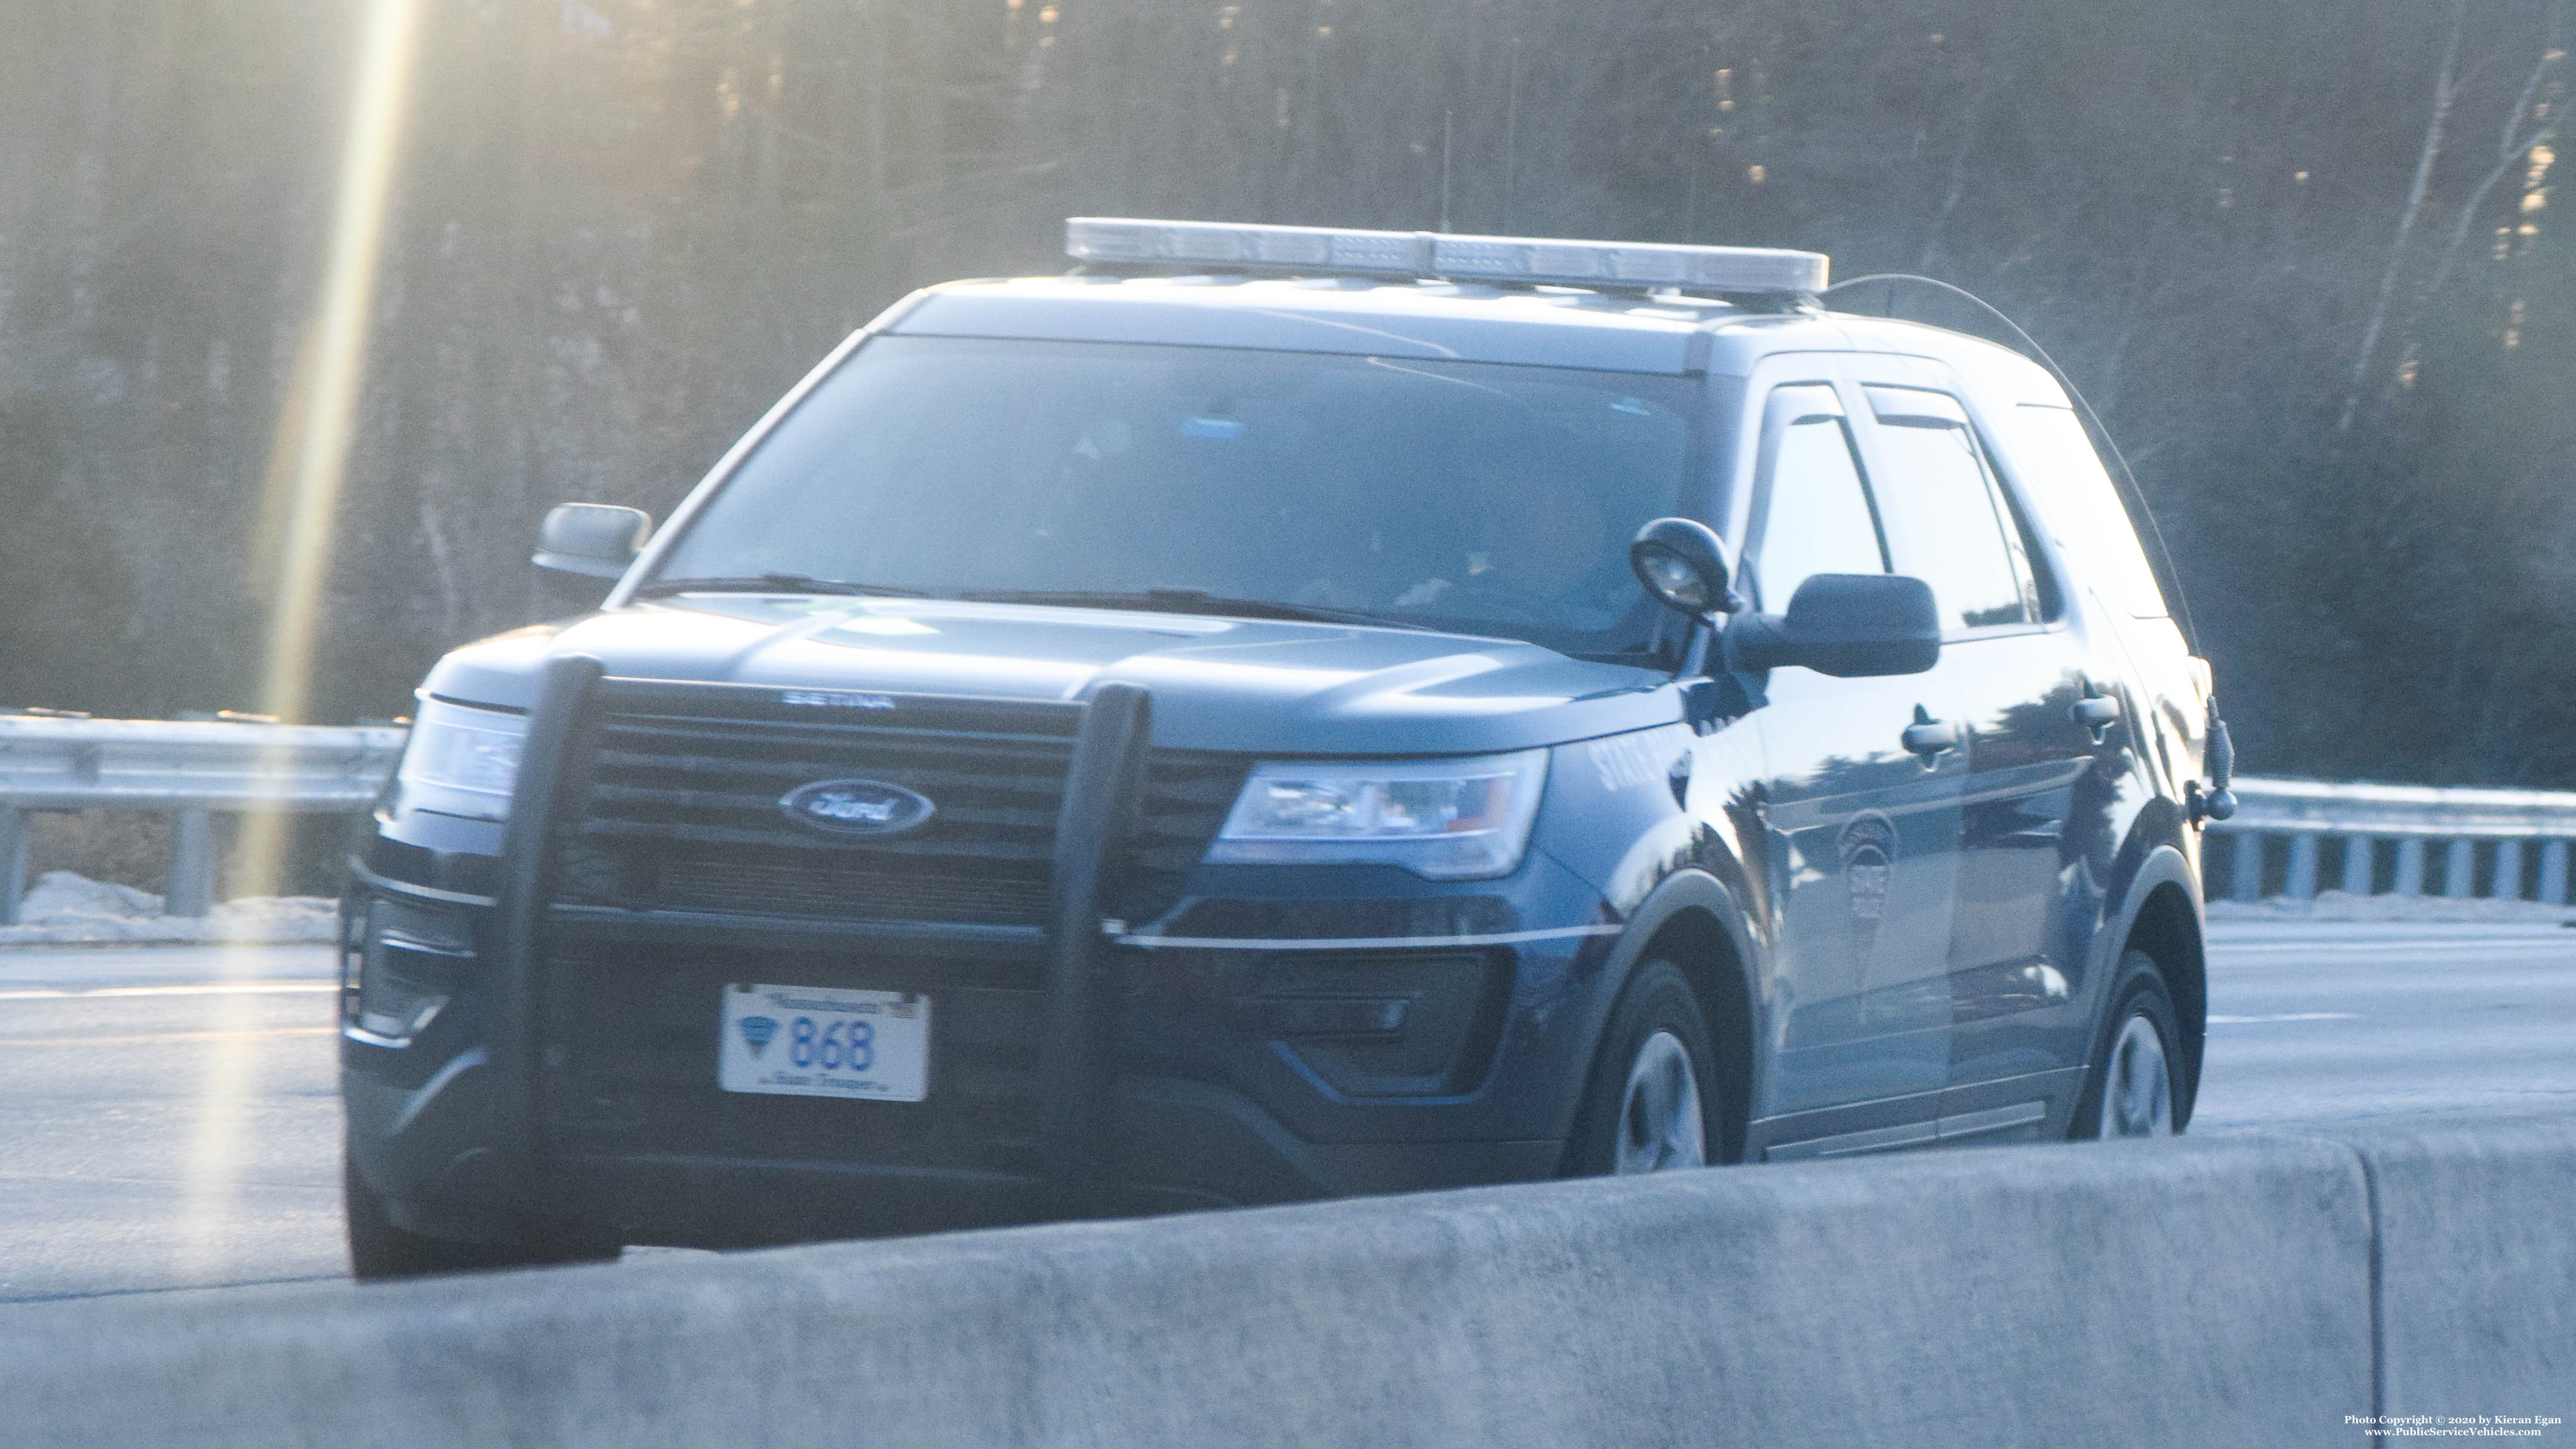 A photo  of Massachusetts State Police
            Cruiser 868, a 2016-2019 Ford Police Interceptor Utility             taken by Kieran Egan